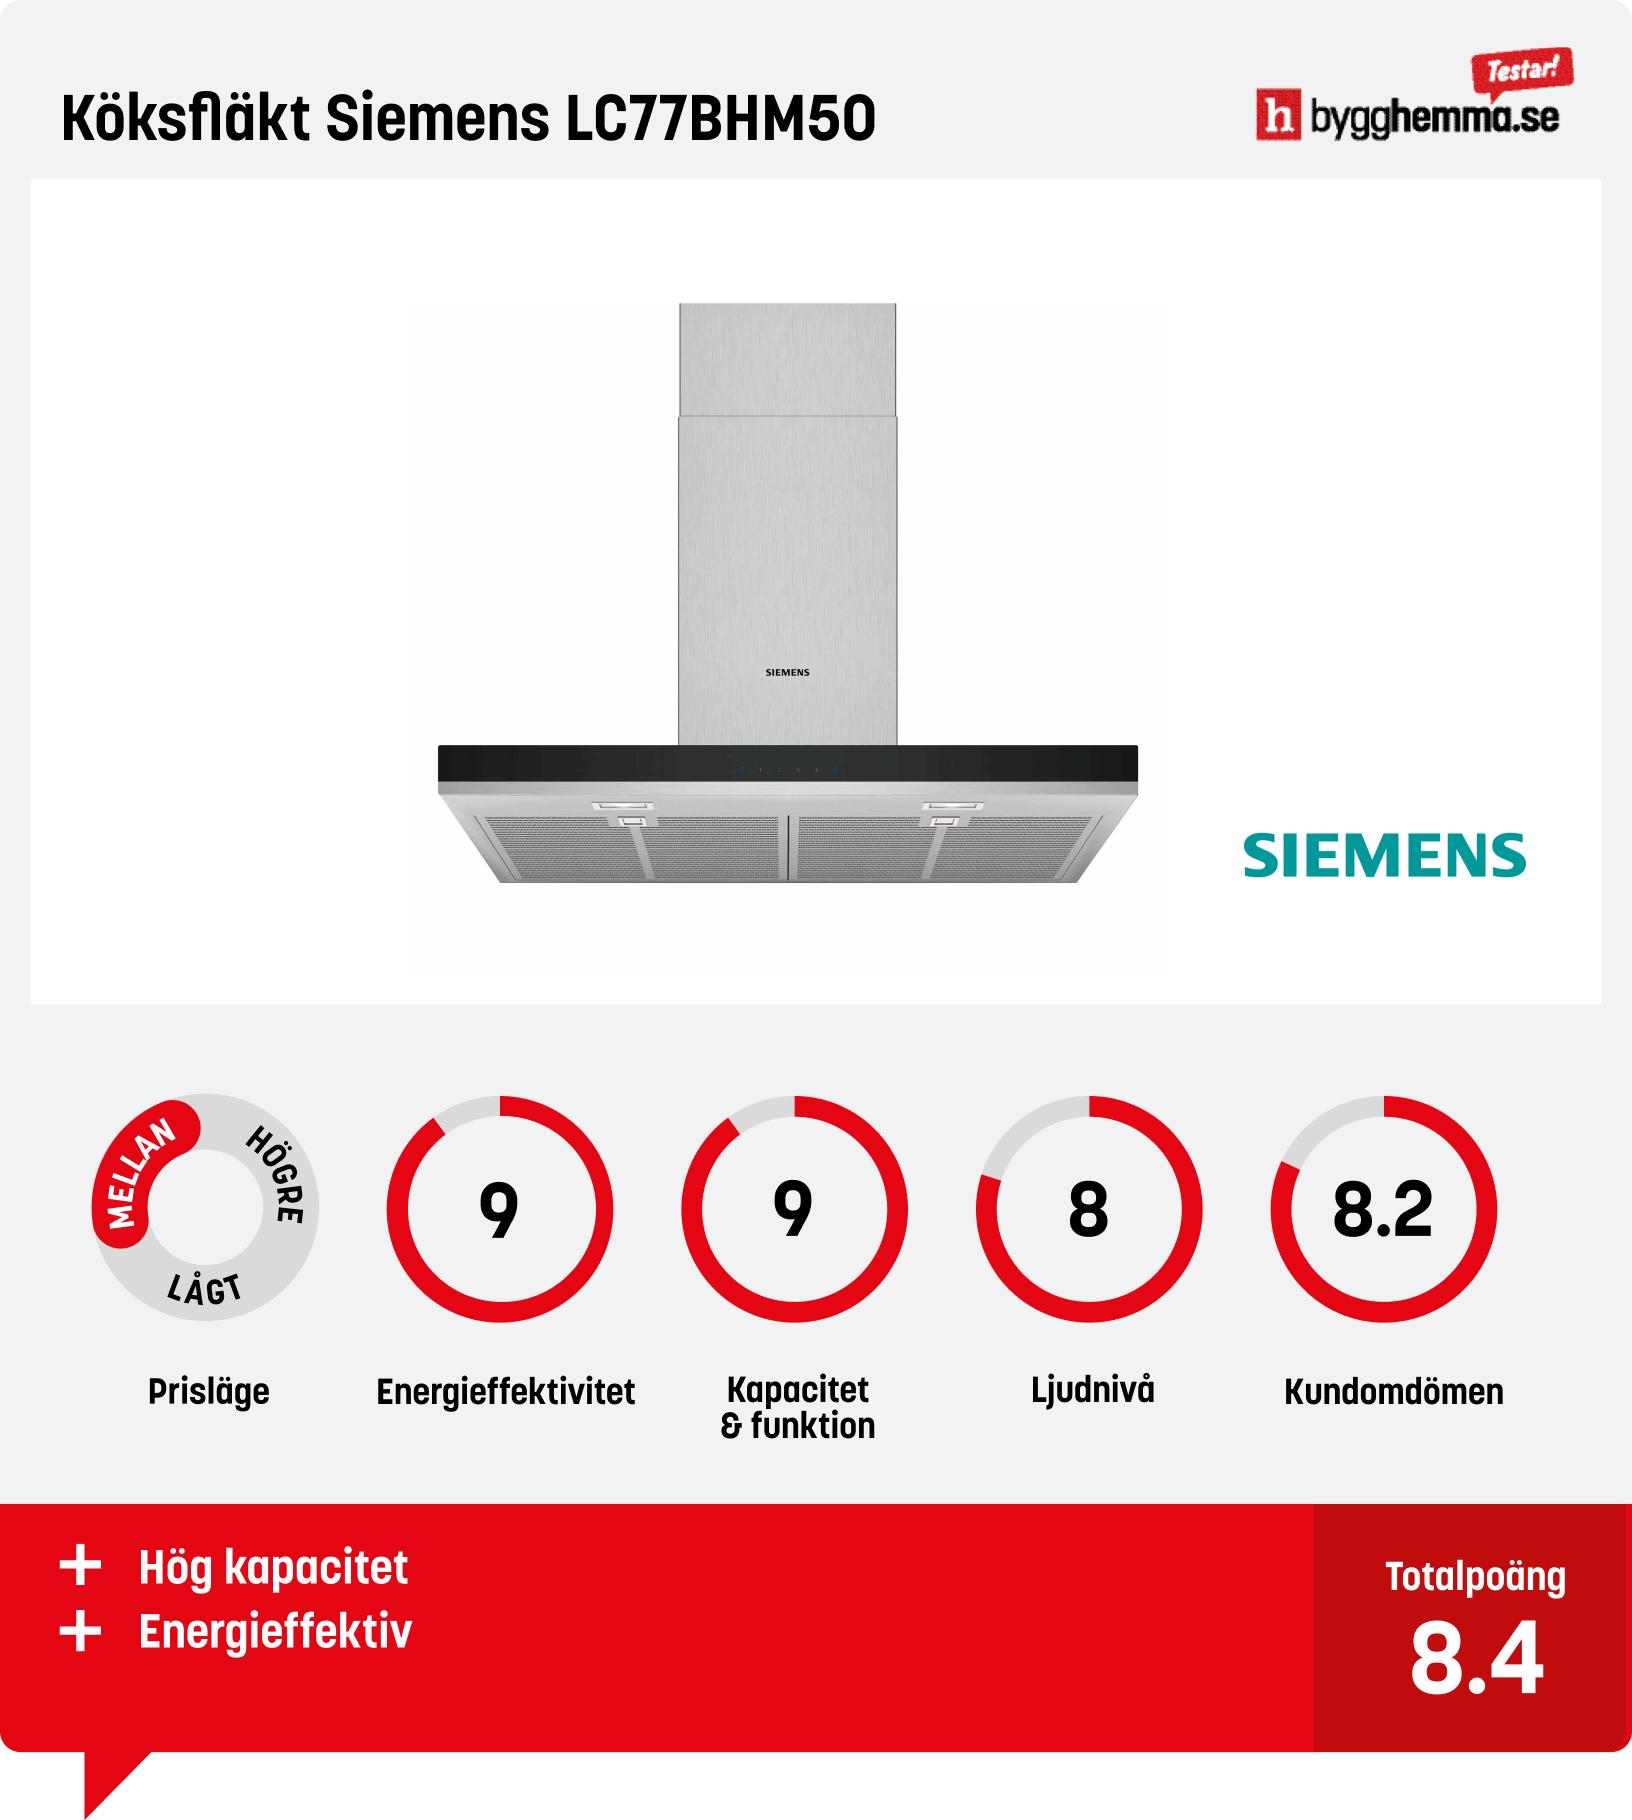 Köksfläkt bäst i test - Köksfläkt Siemens LC77BHM50